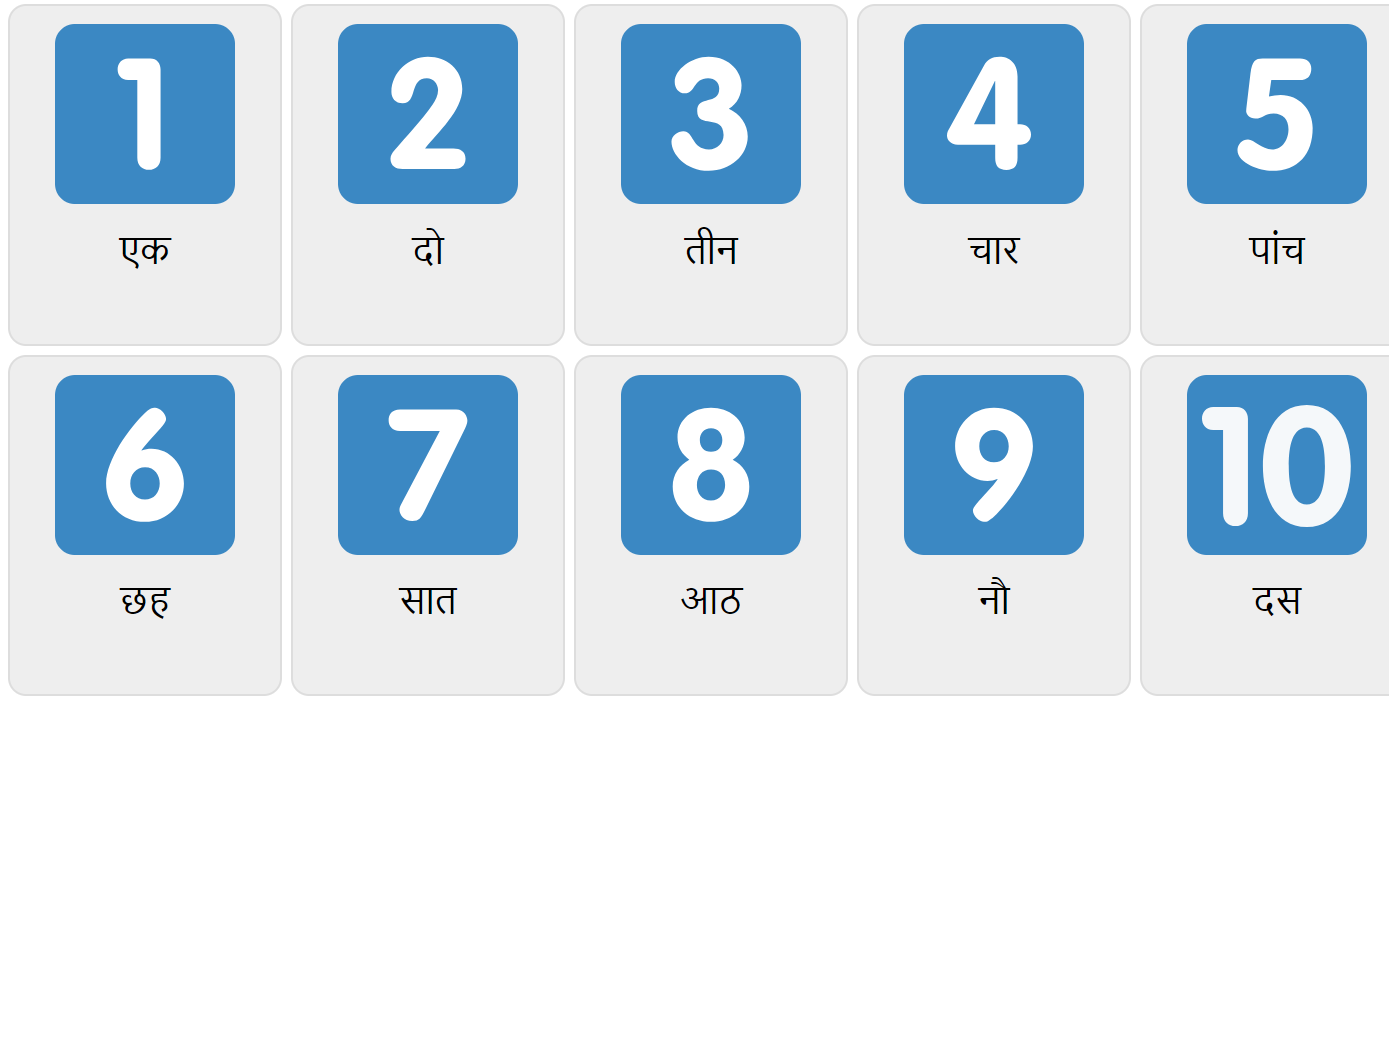 Числа 1-10 на языке хинди